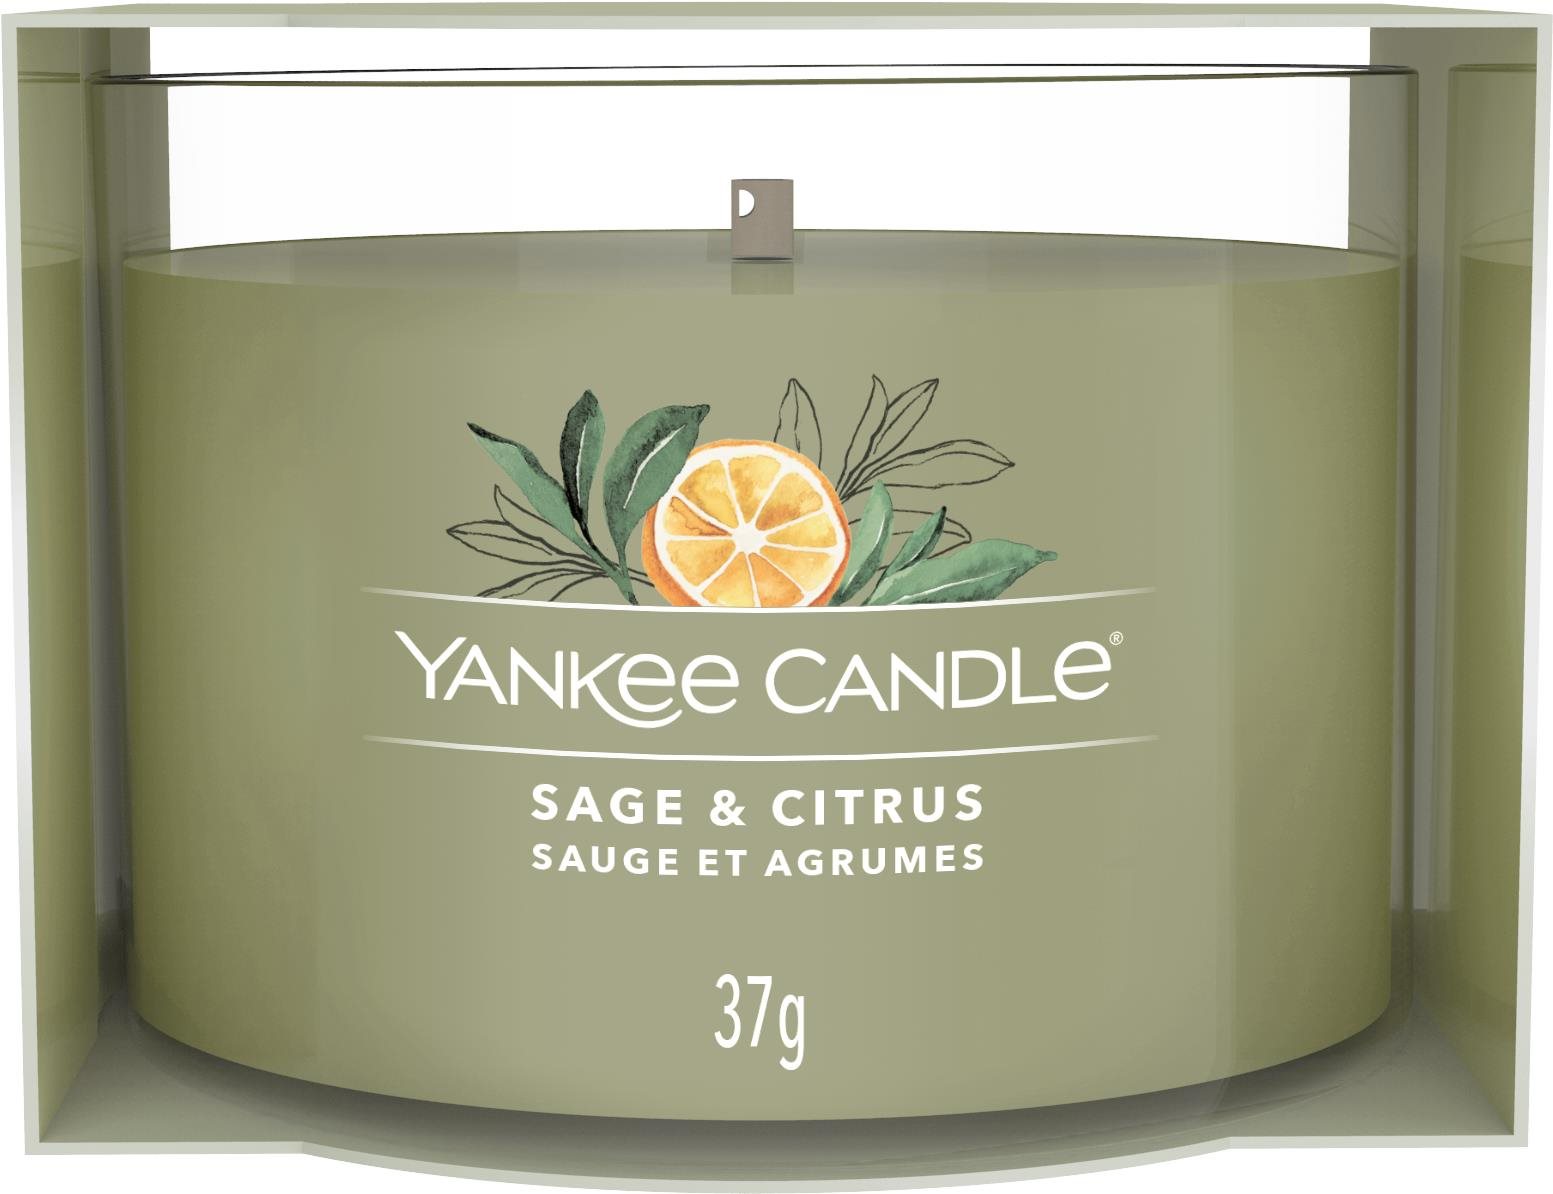 YANKEE CANDLE Sage & Citrus 37 g